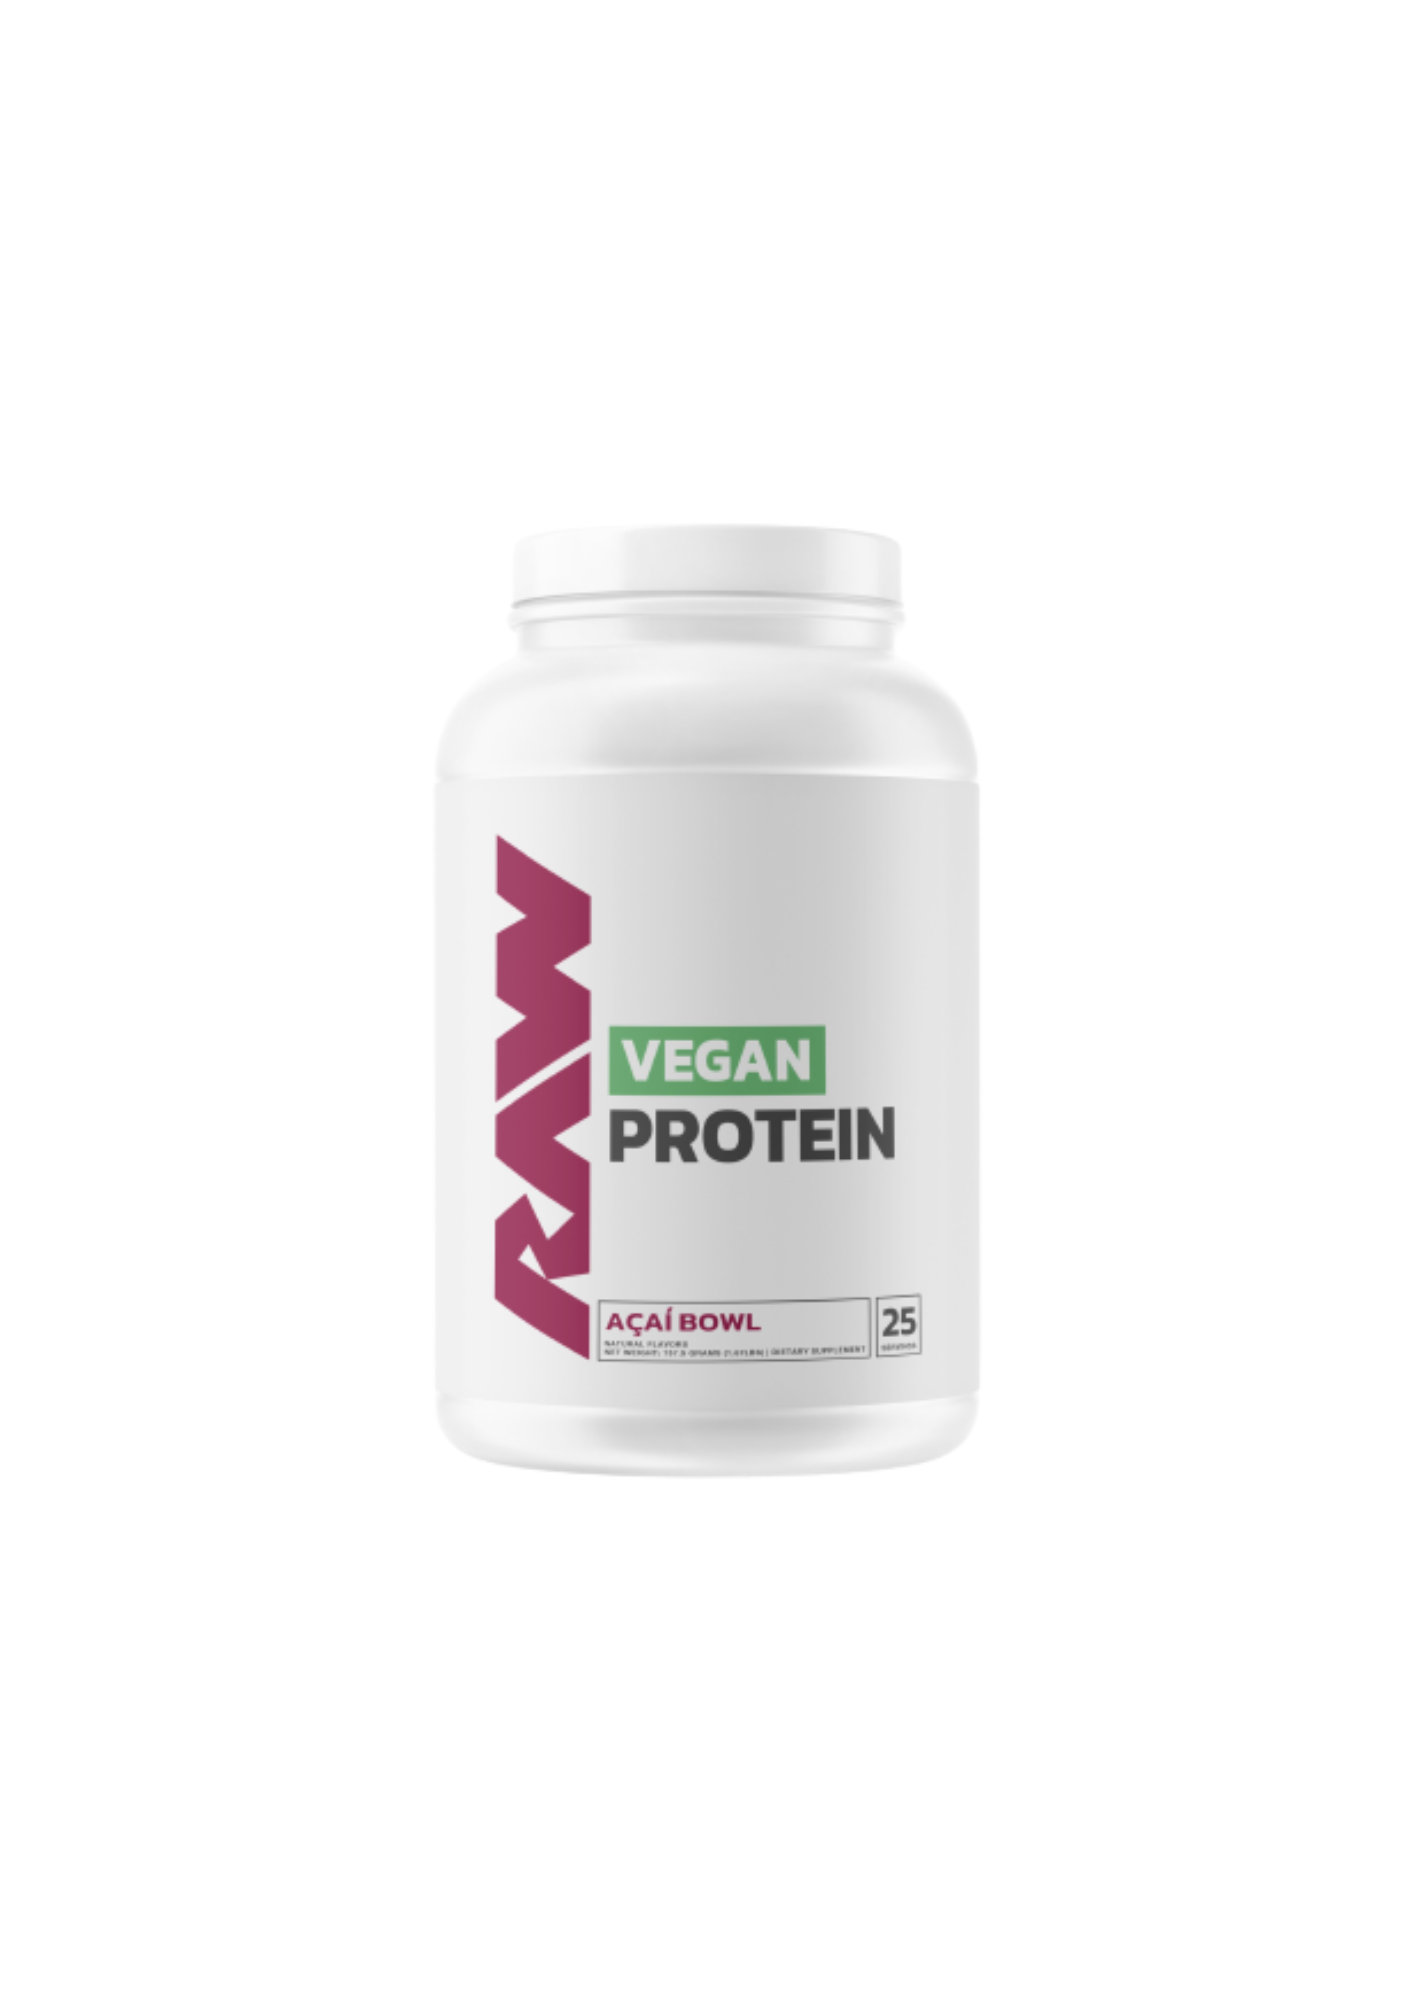 Raw vegan protein